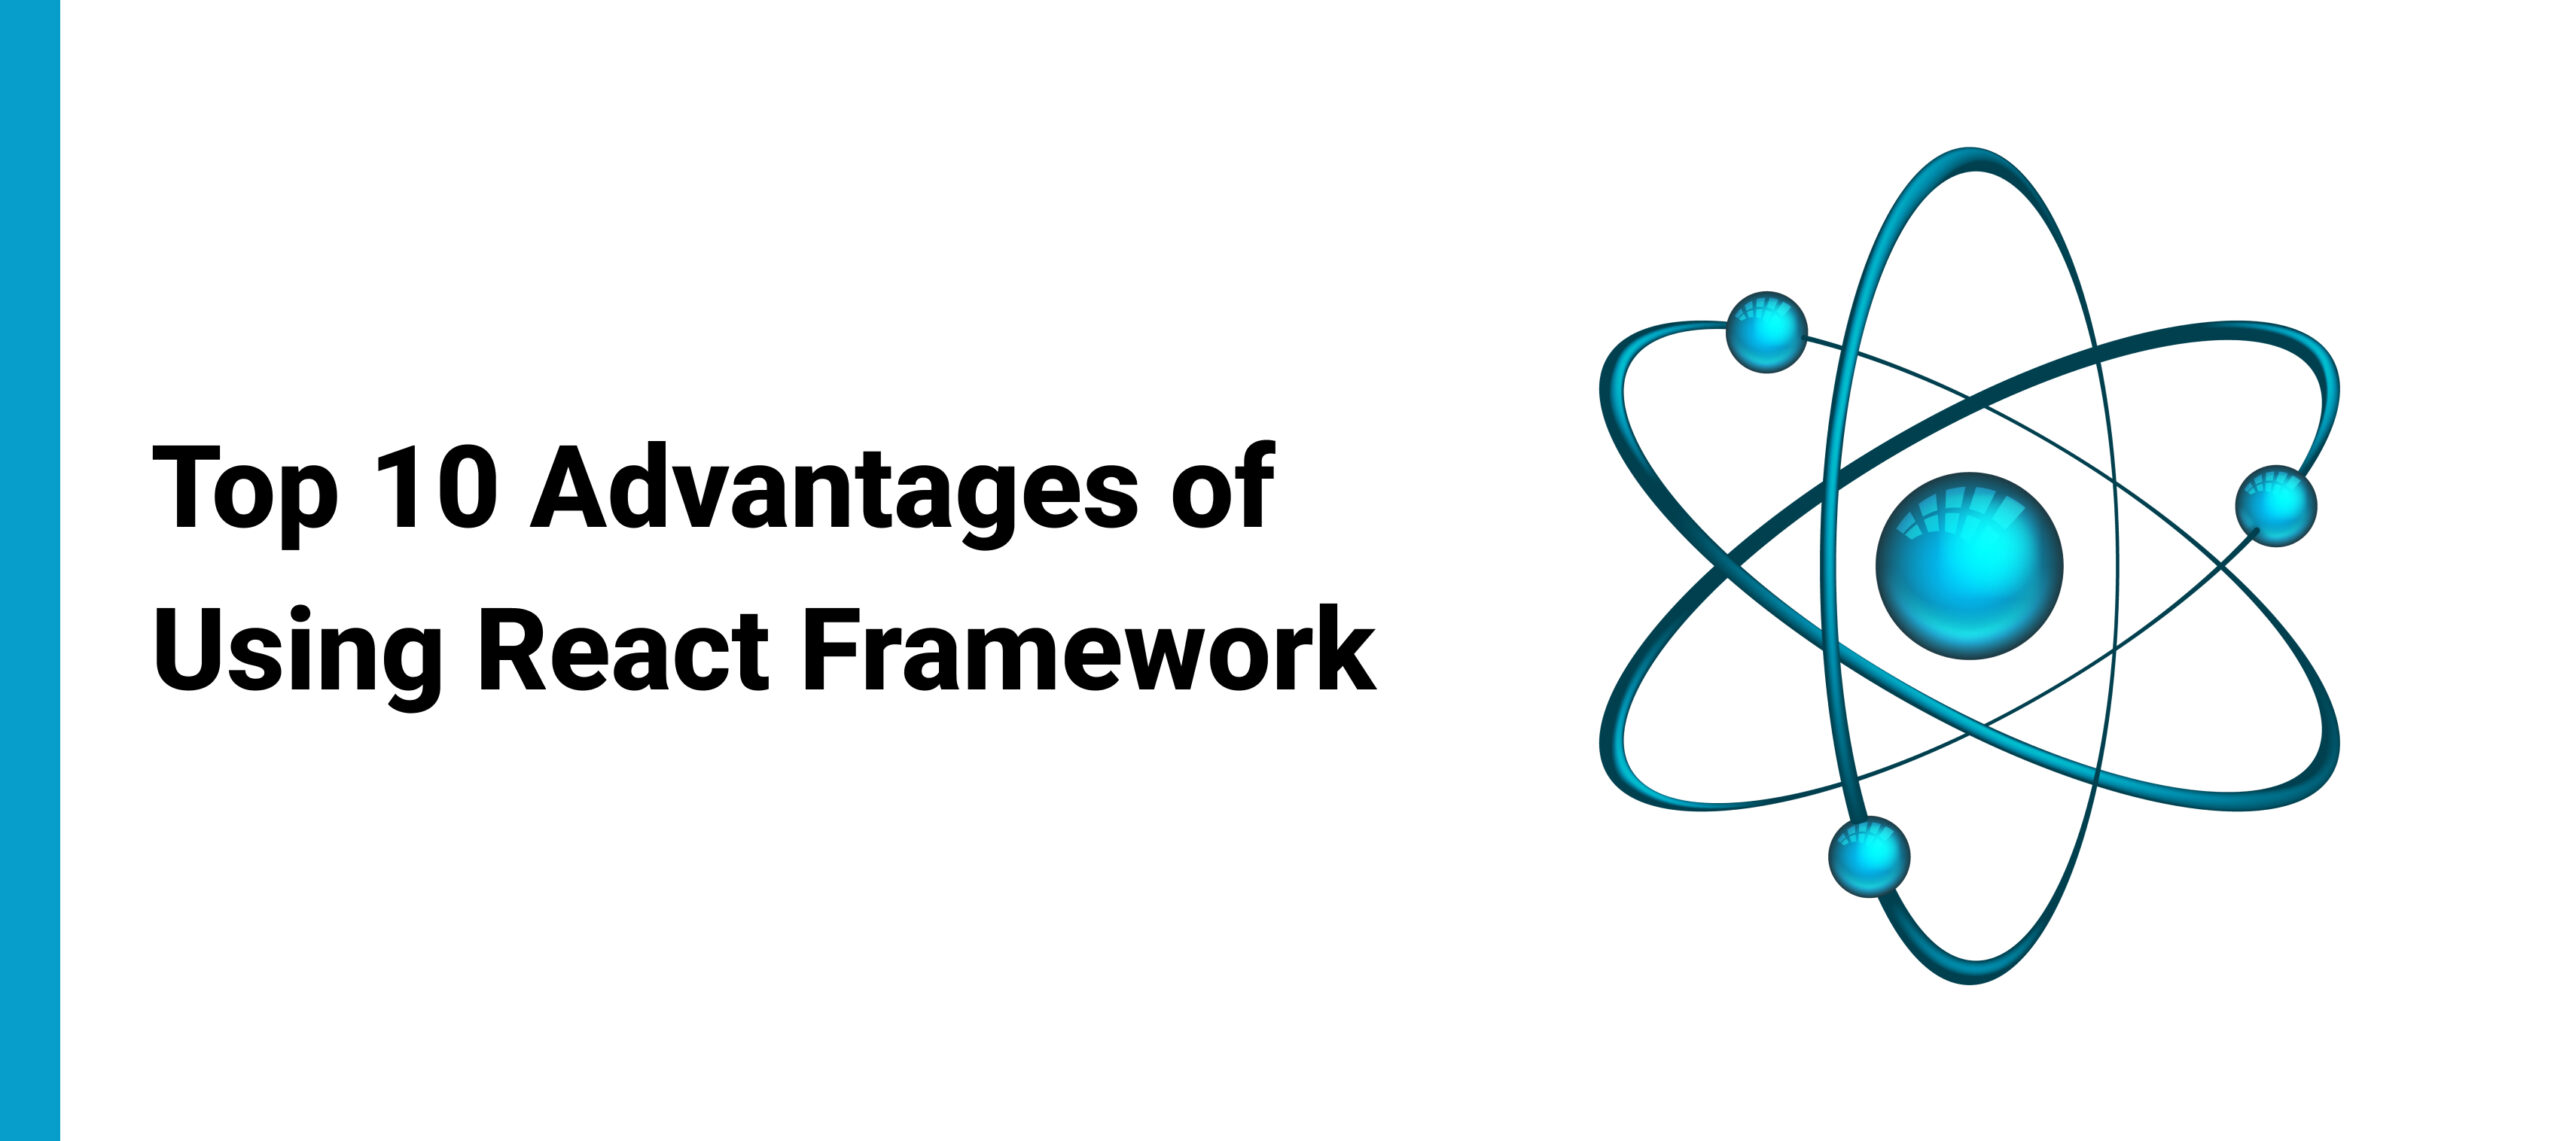  Top 10 Advantages of Using React Framework 